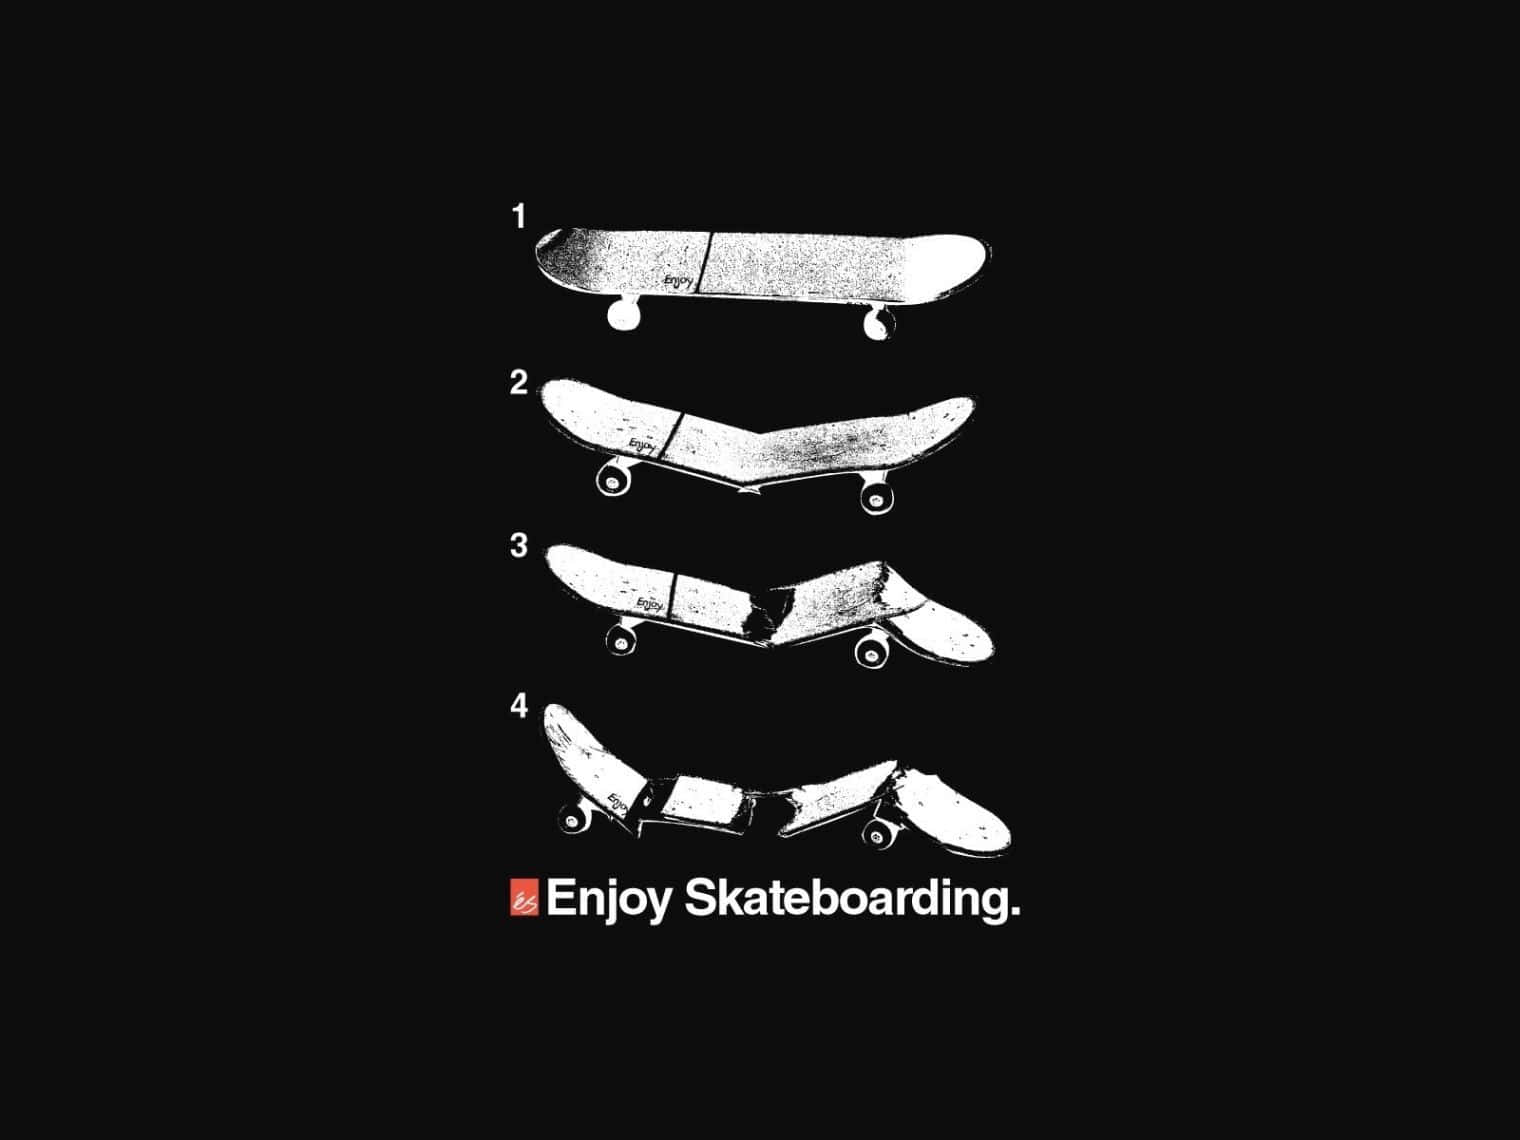 Skateboard Sequence Enjoy Skateboarding Wallpaper